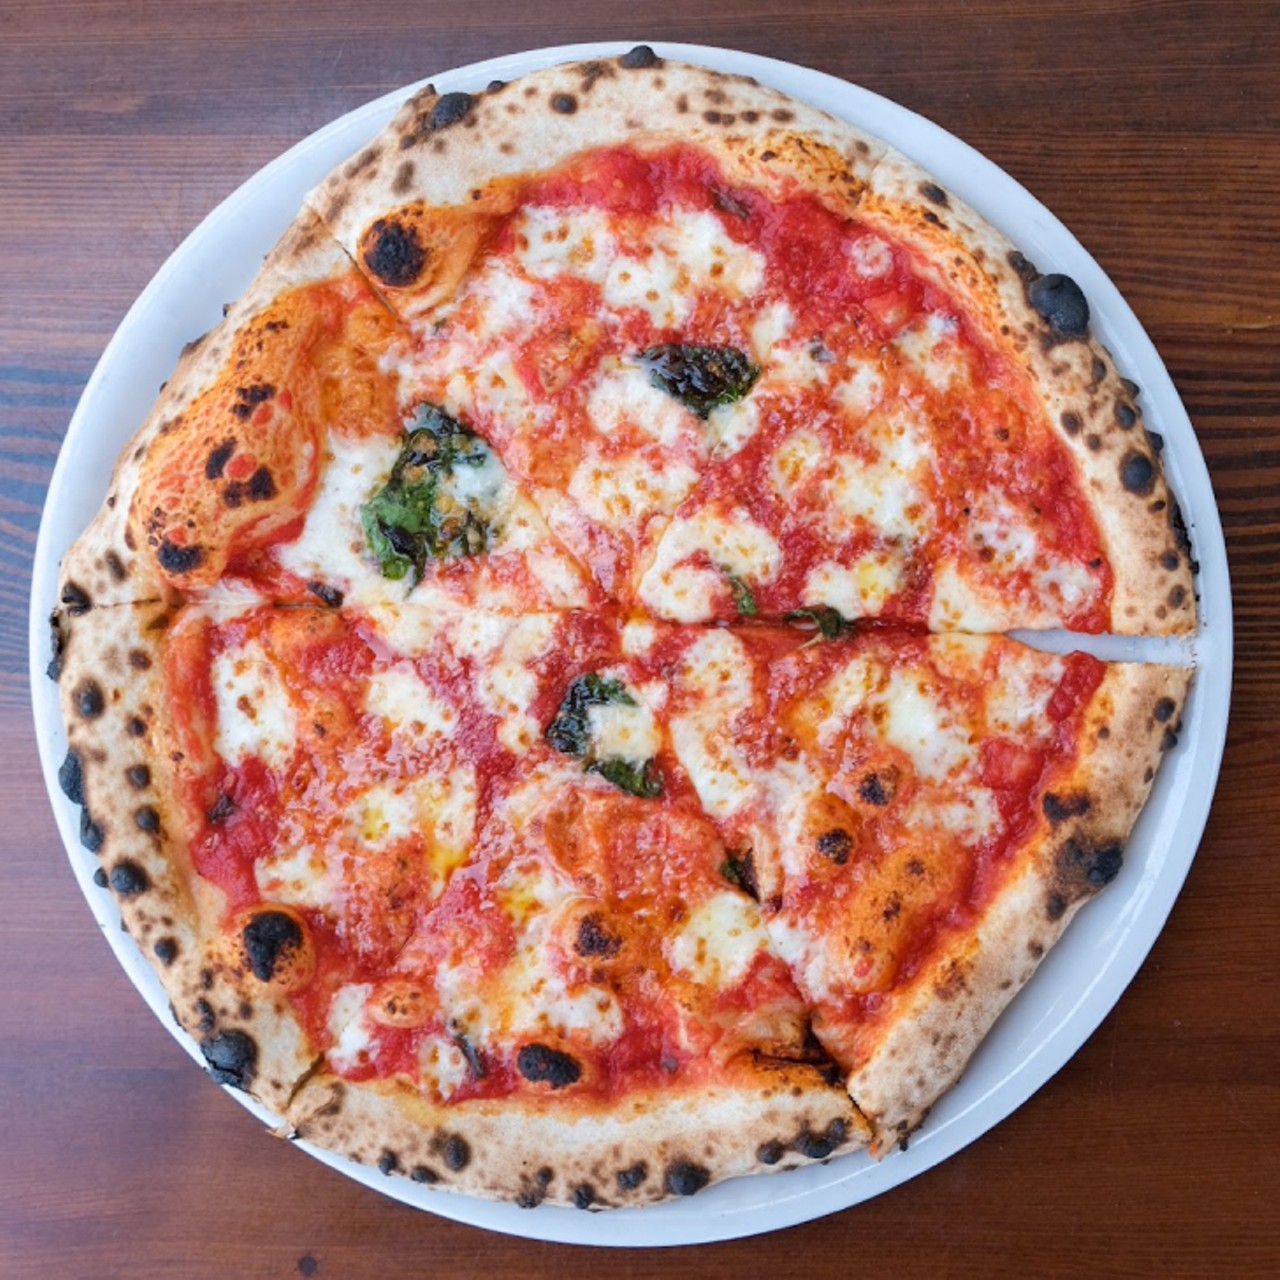 Fabrica Pizza
Multiple locations
fabricapizza.com  
$10 - Margherita pizza.
Takeout (call-in), Dine-in